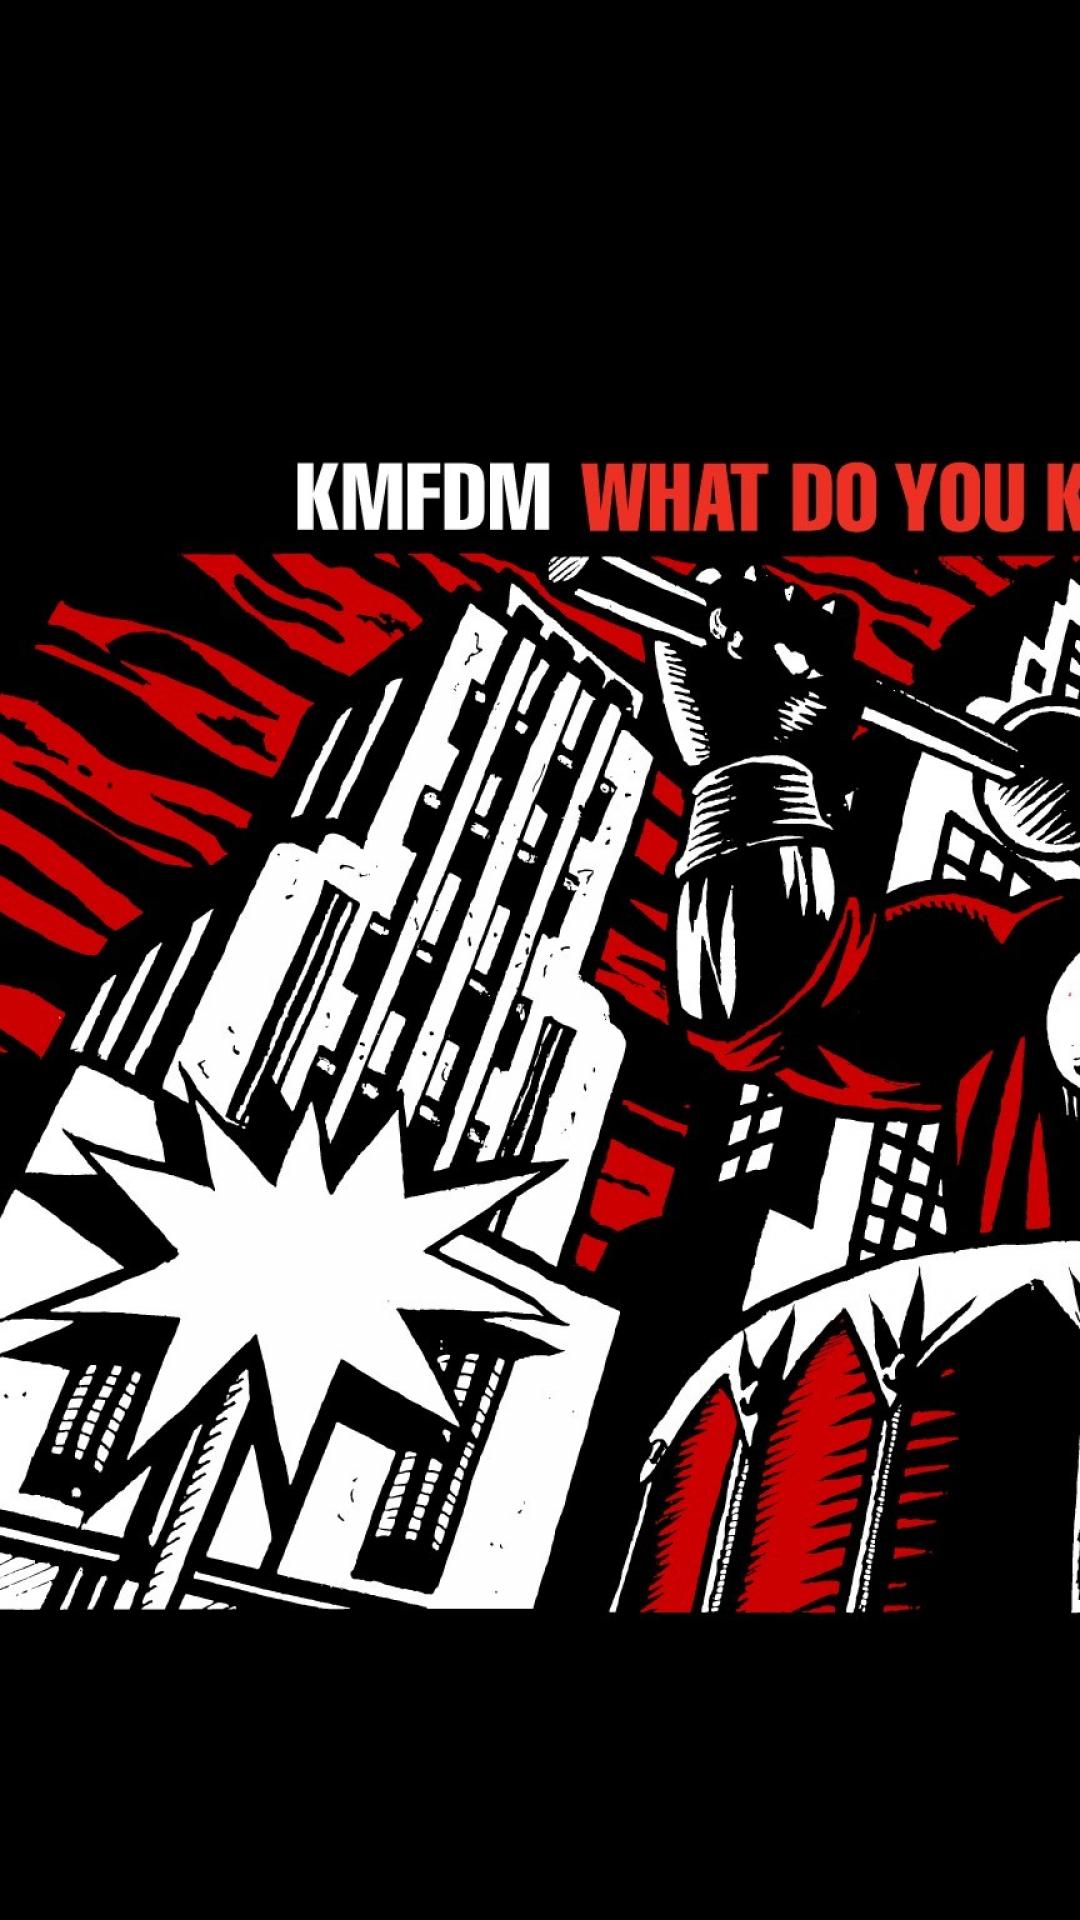 Industrial Music Kmfdm Album Covers Bands Wallpaper